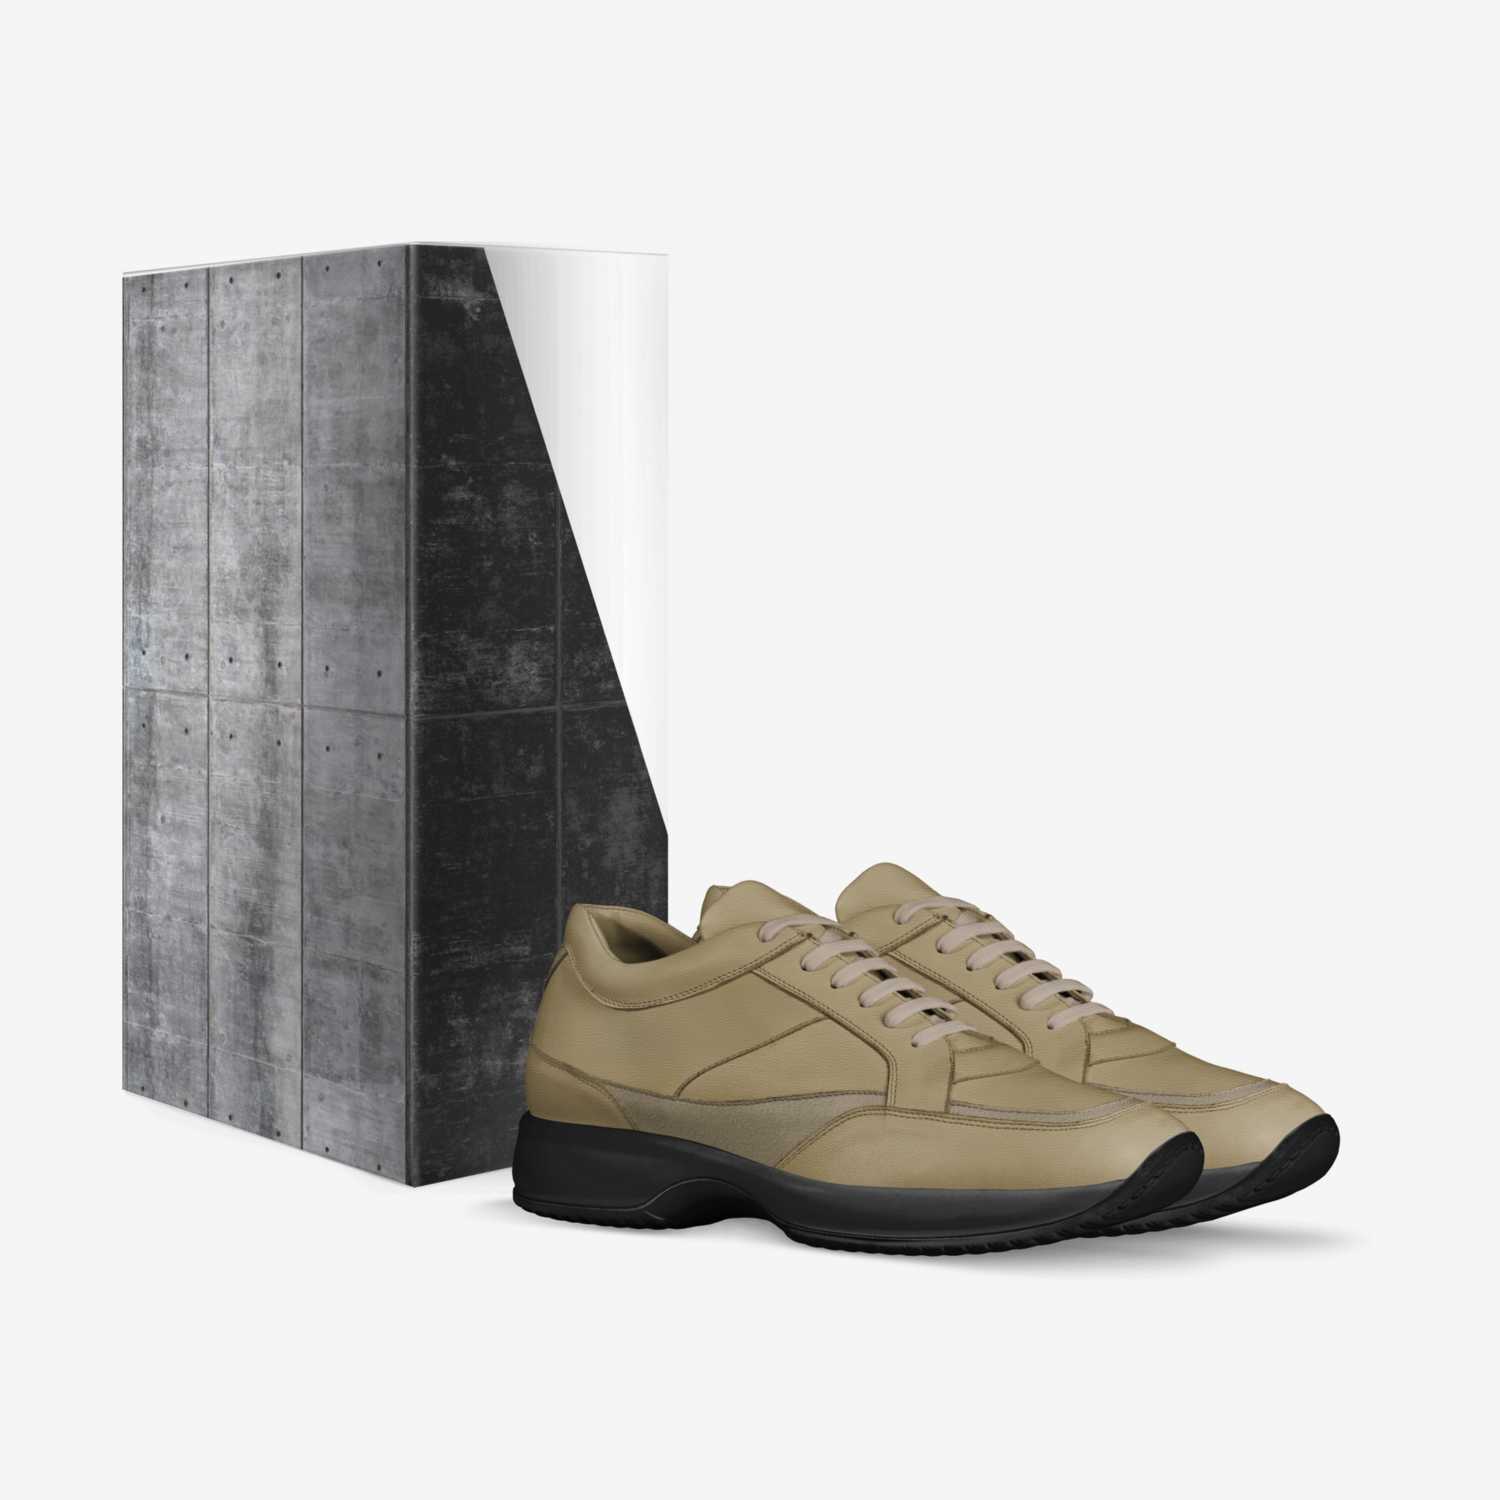 Kato Frank  custom made in Italy shoes by Kato Frank | Box view